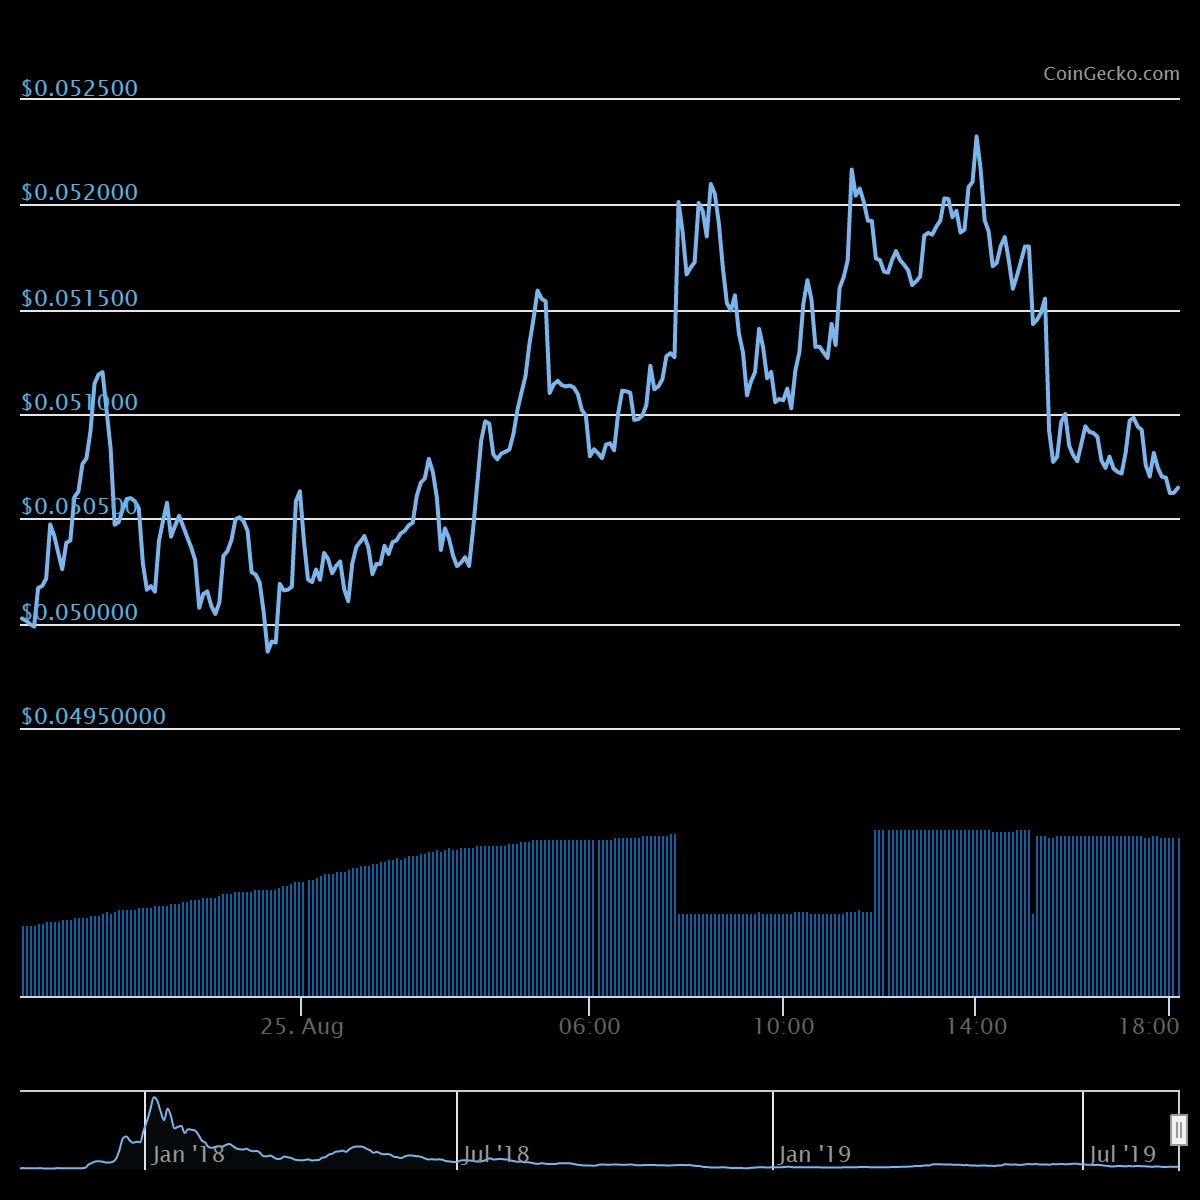 Cardano (ADA) On Upward Trend: Can It Reach $0.1 Soon?